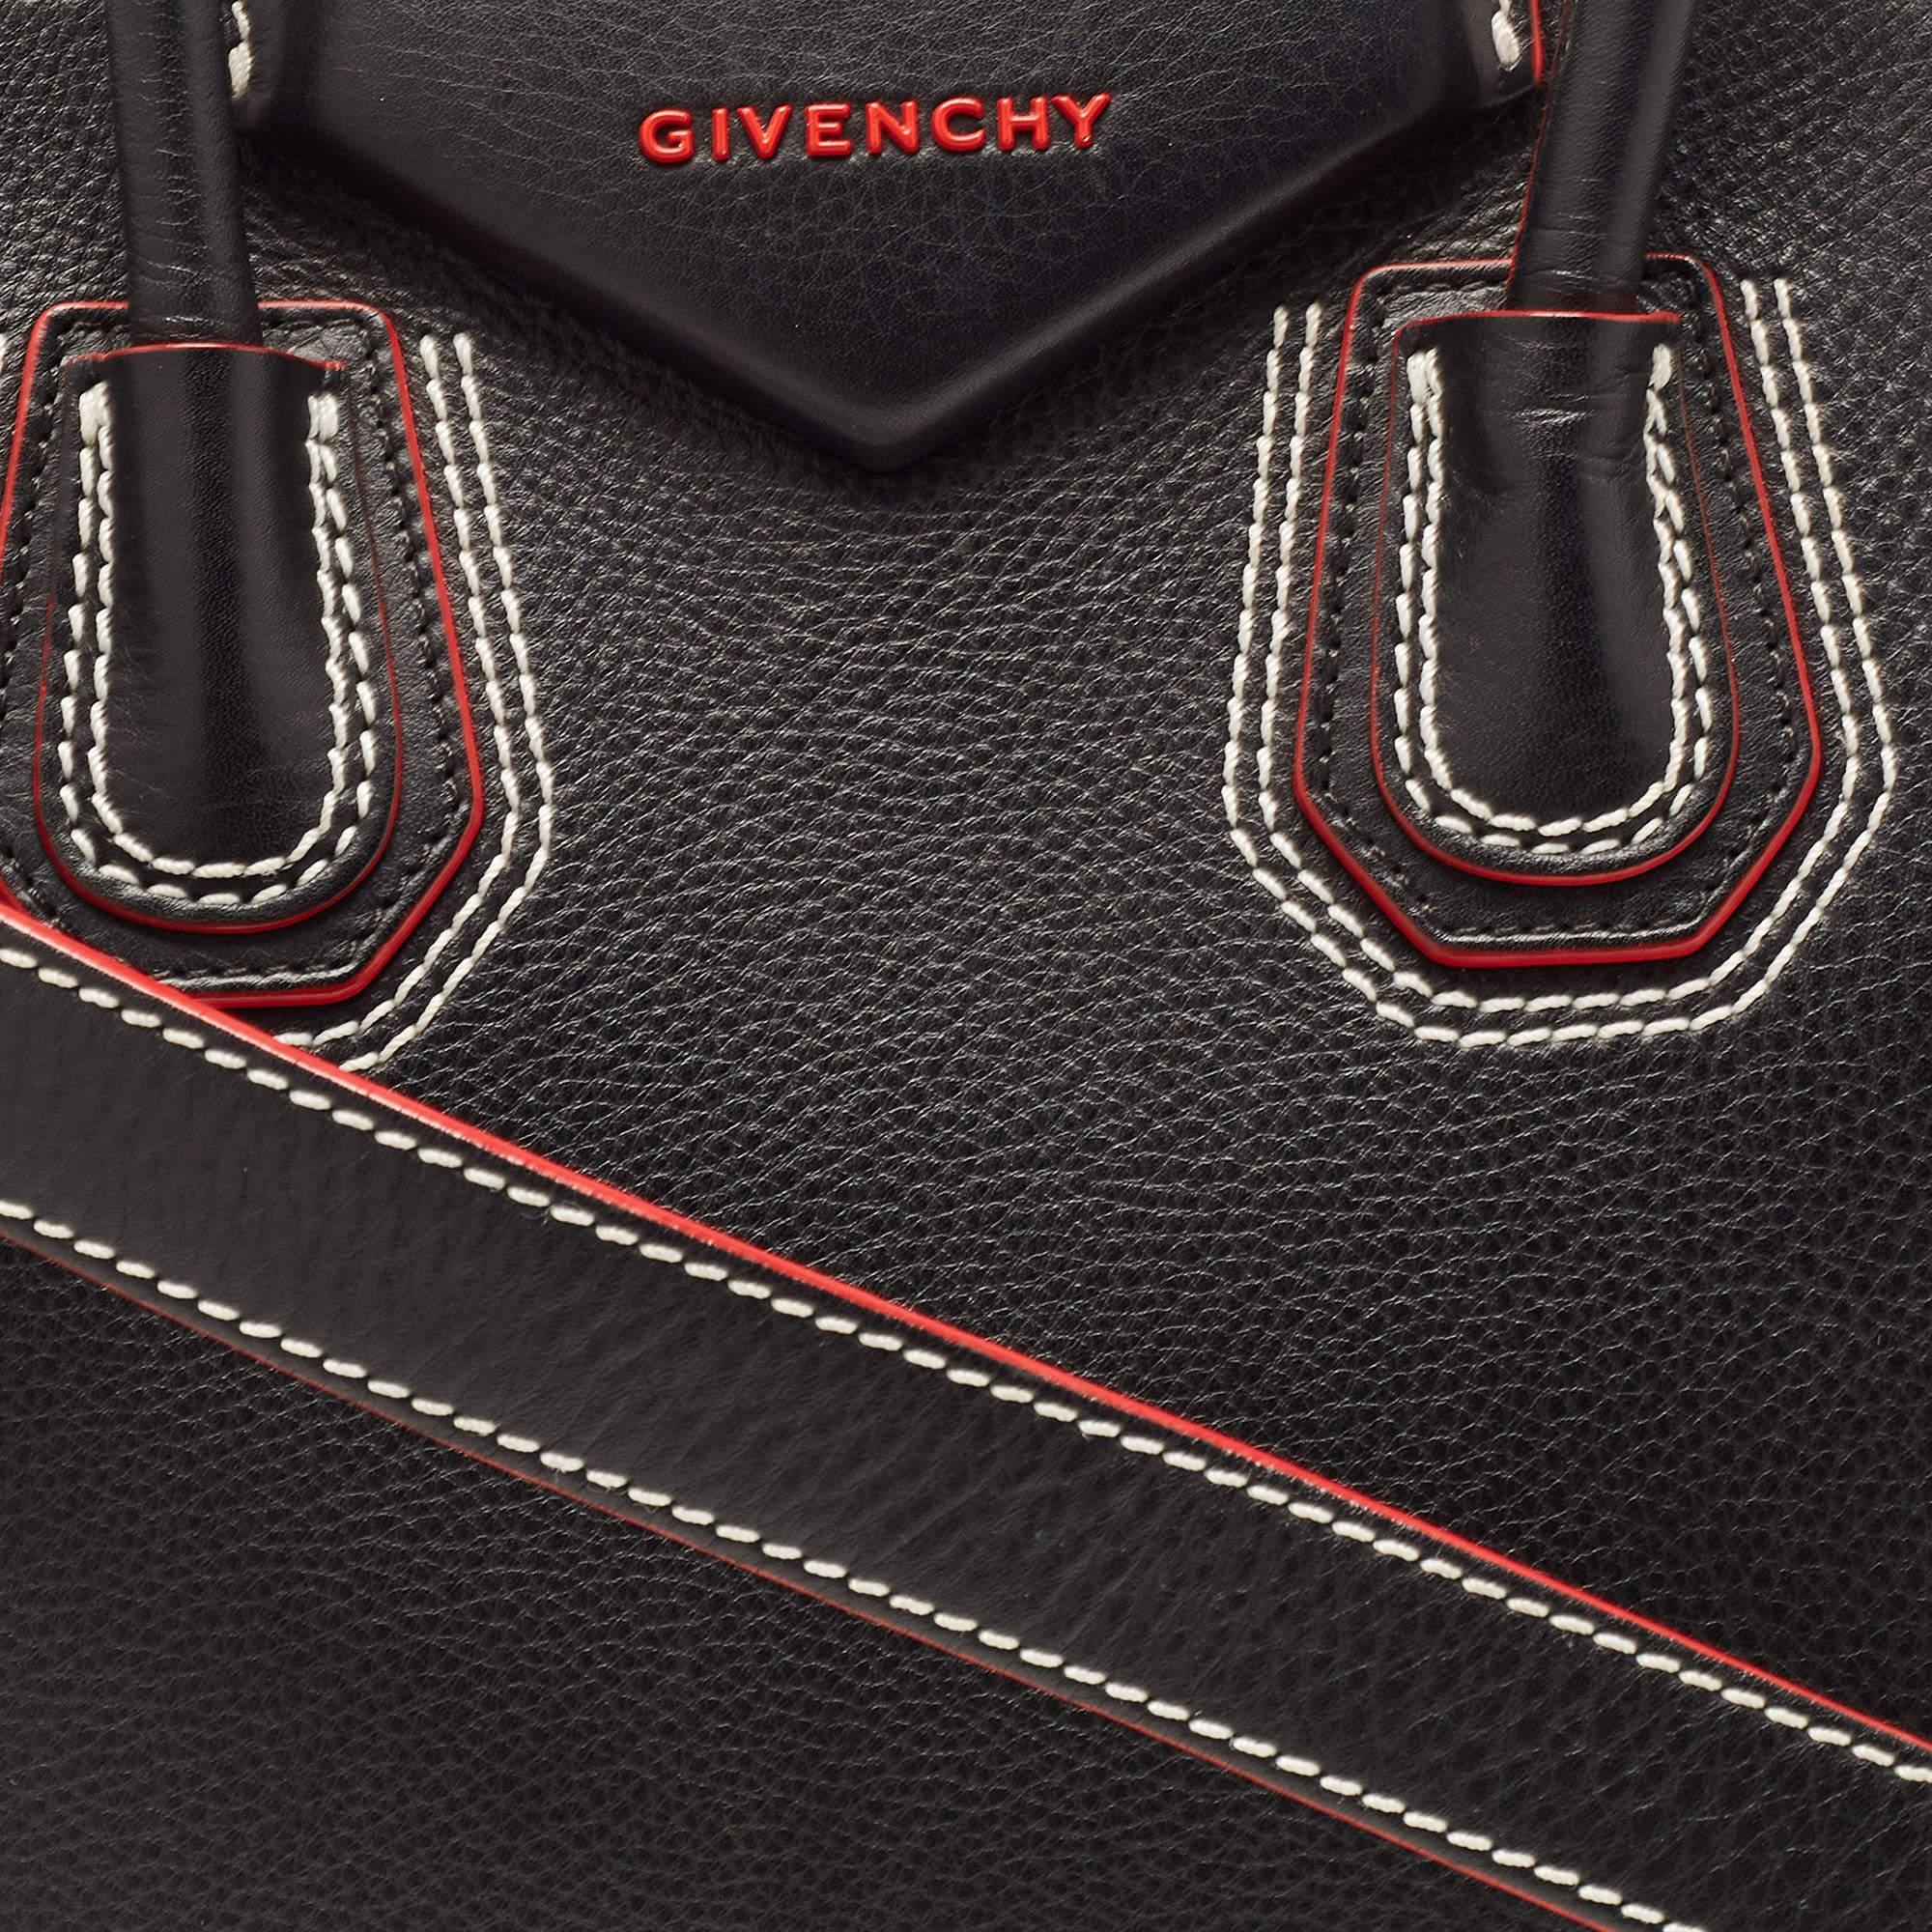 Givenchy Black/Red Leather Small Antigona Satchel 6